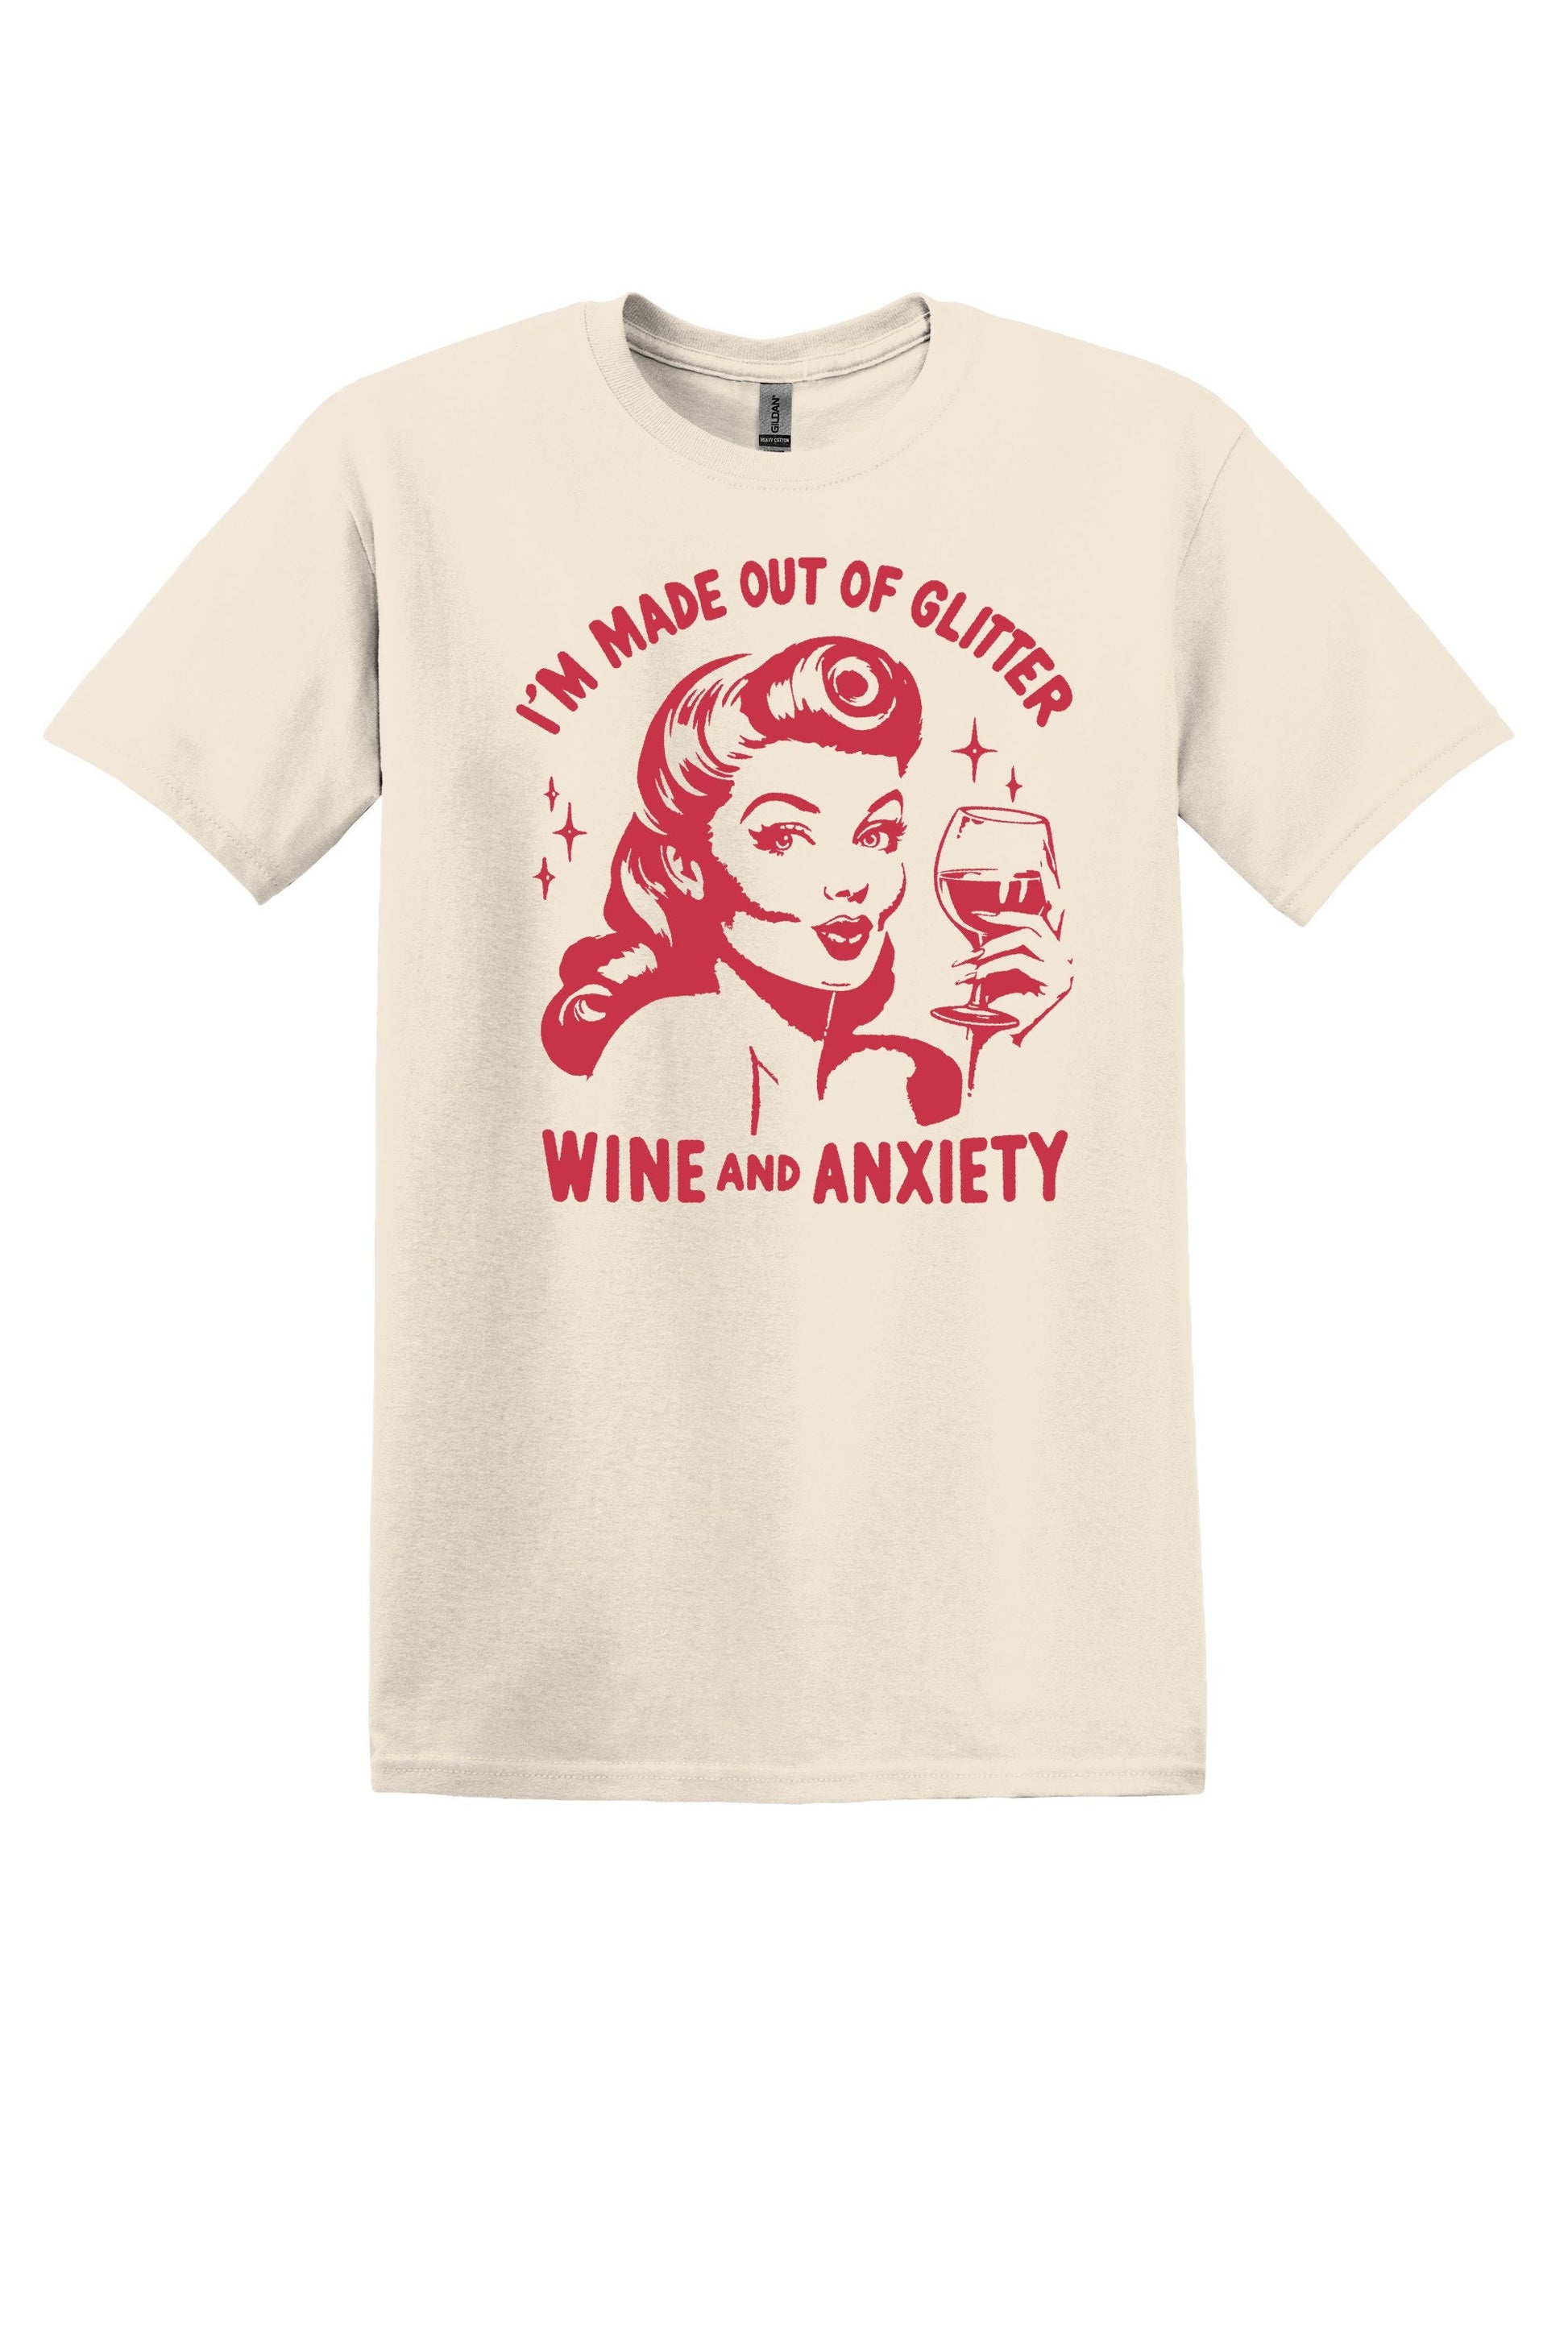 I'm Made out of Glitter Wine and Anxiety shirt Funny Shirt Mental Heath TShirt Ironic T Shirt Sarcastic Shirt trendy shirt